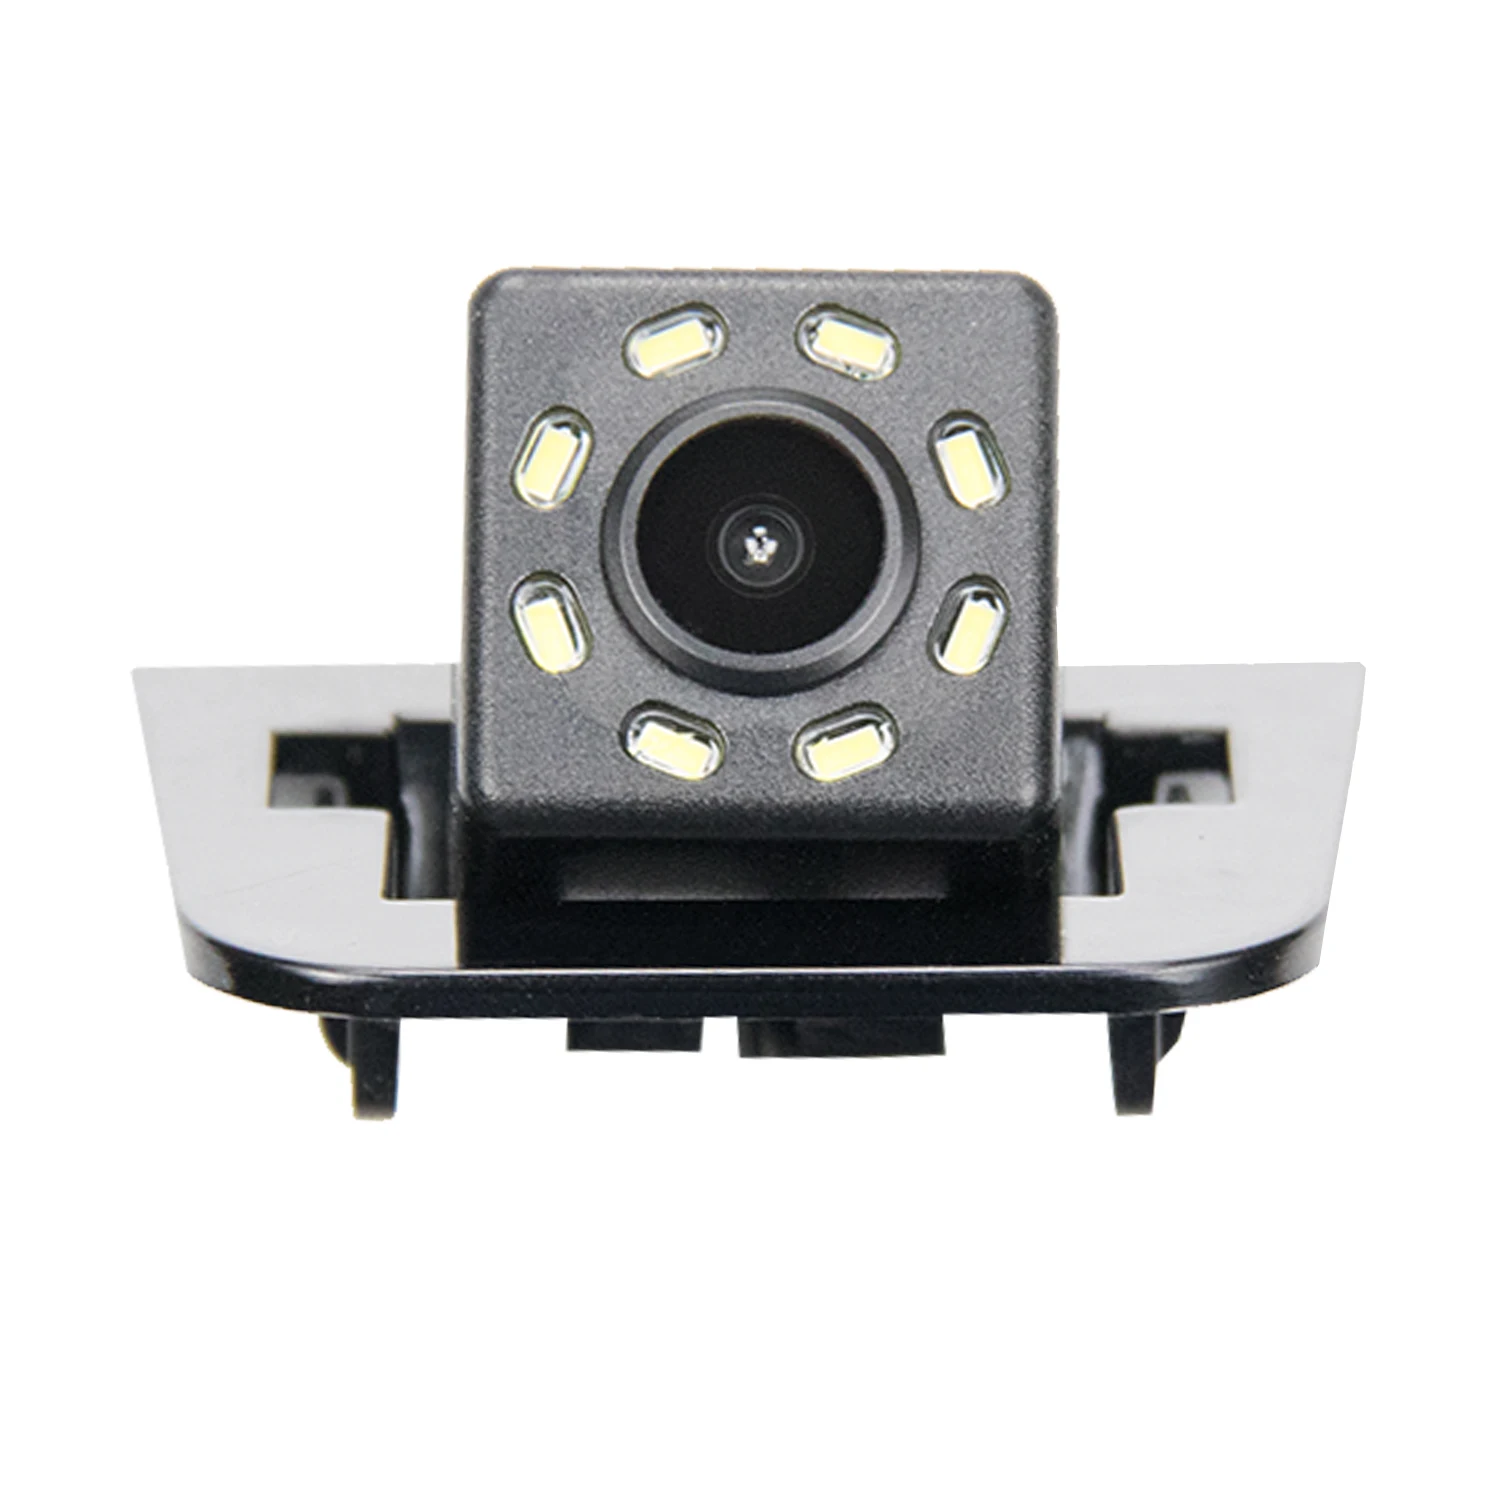 HD 720p Rear Camera Reversing Backup Camera Rearview License Plate Parking Camera Waterproof for Toyota Prius XW30 MK3 2009 2010 2011 2012 2013 2014 2015